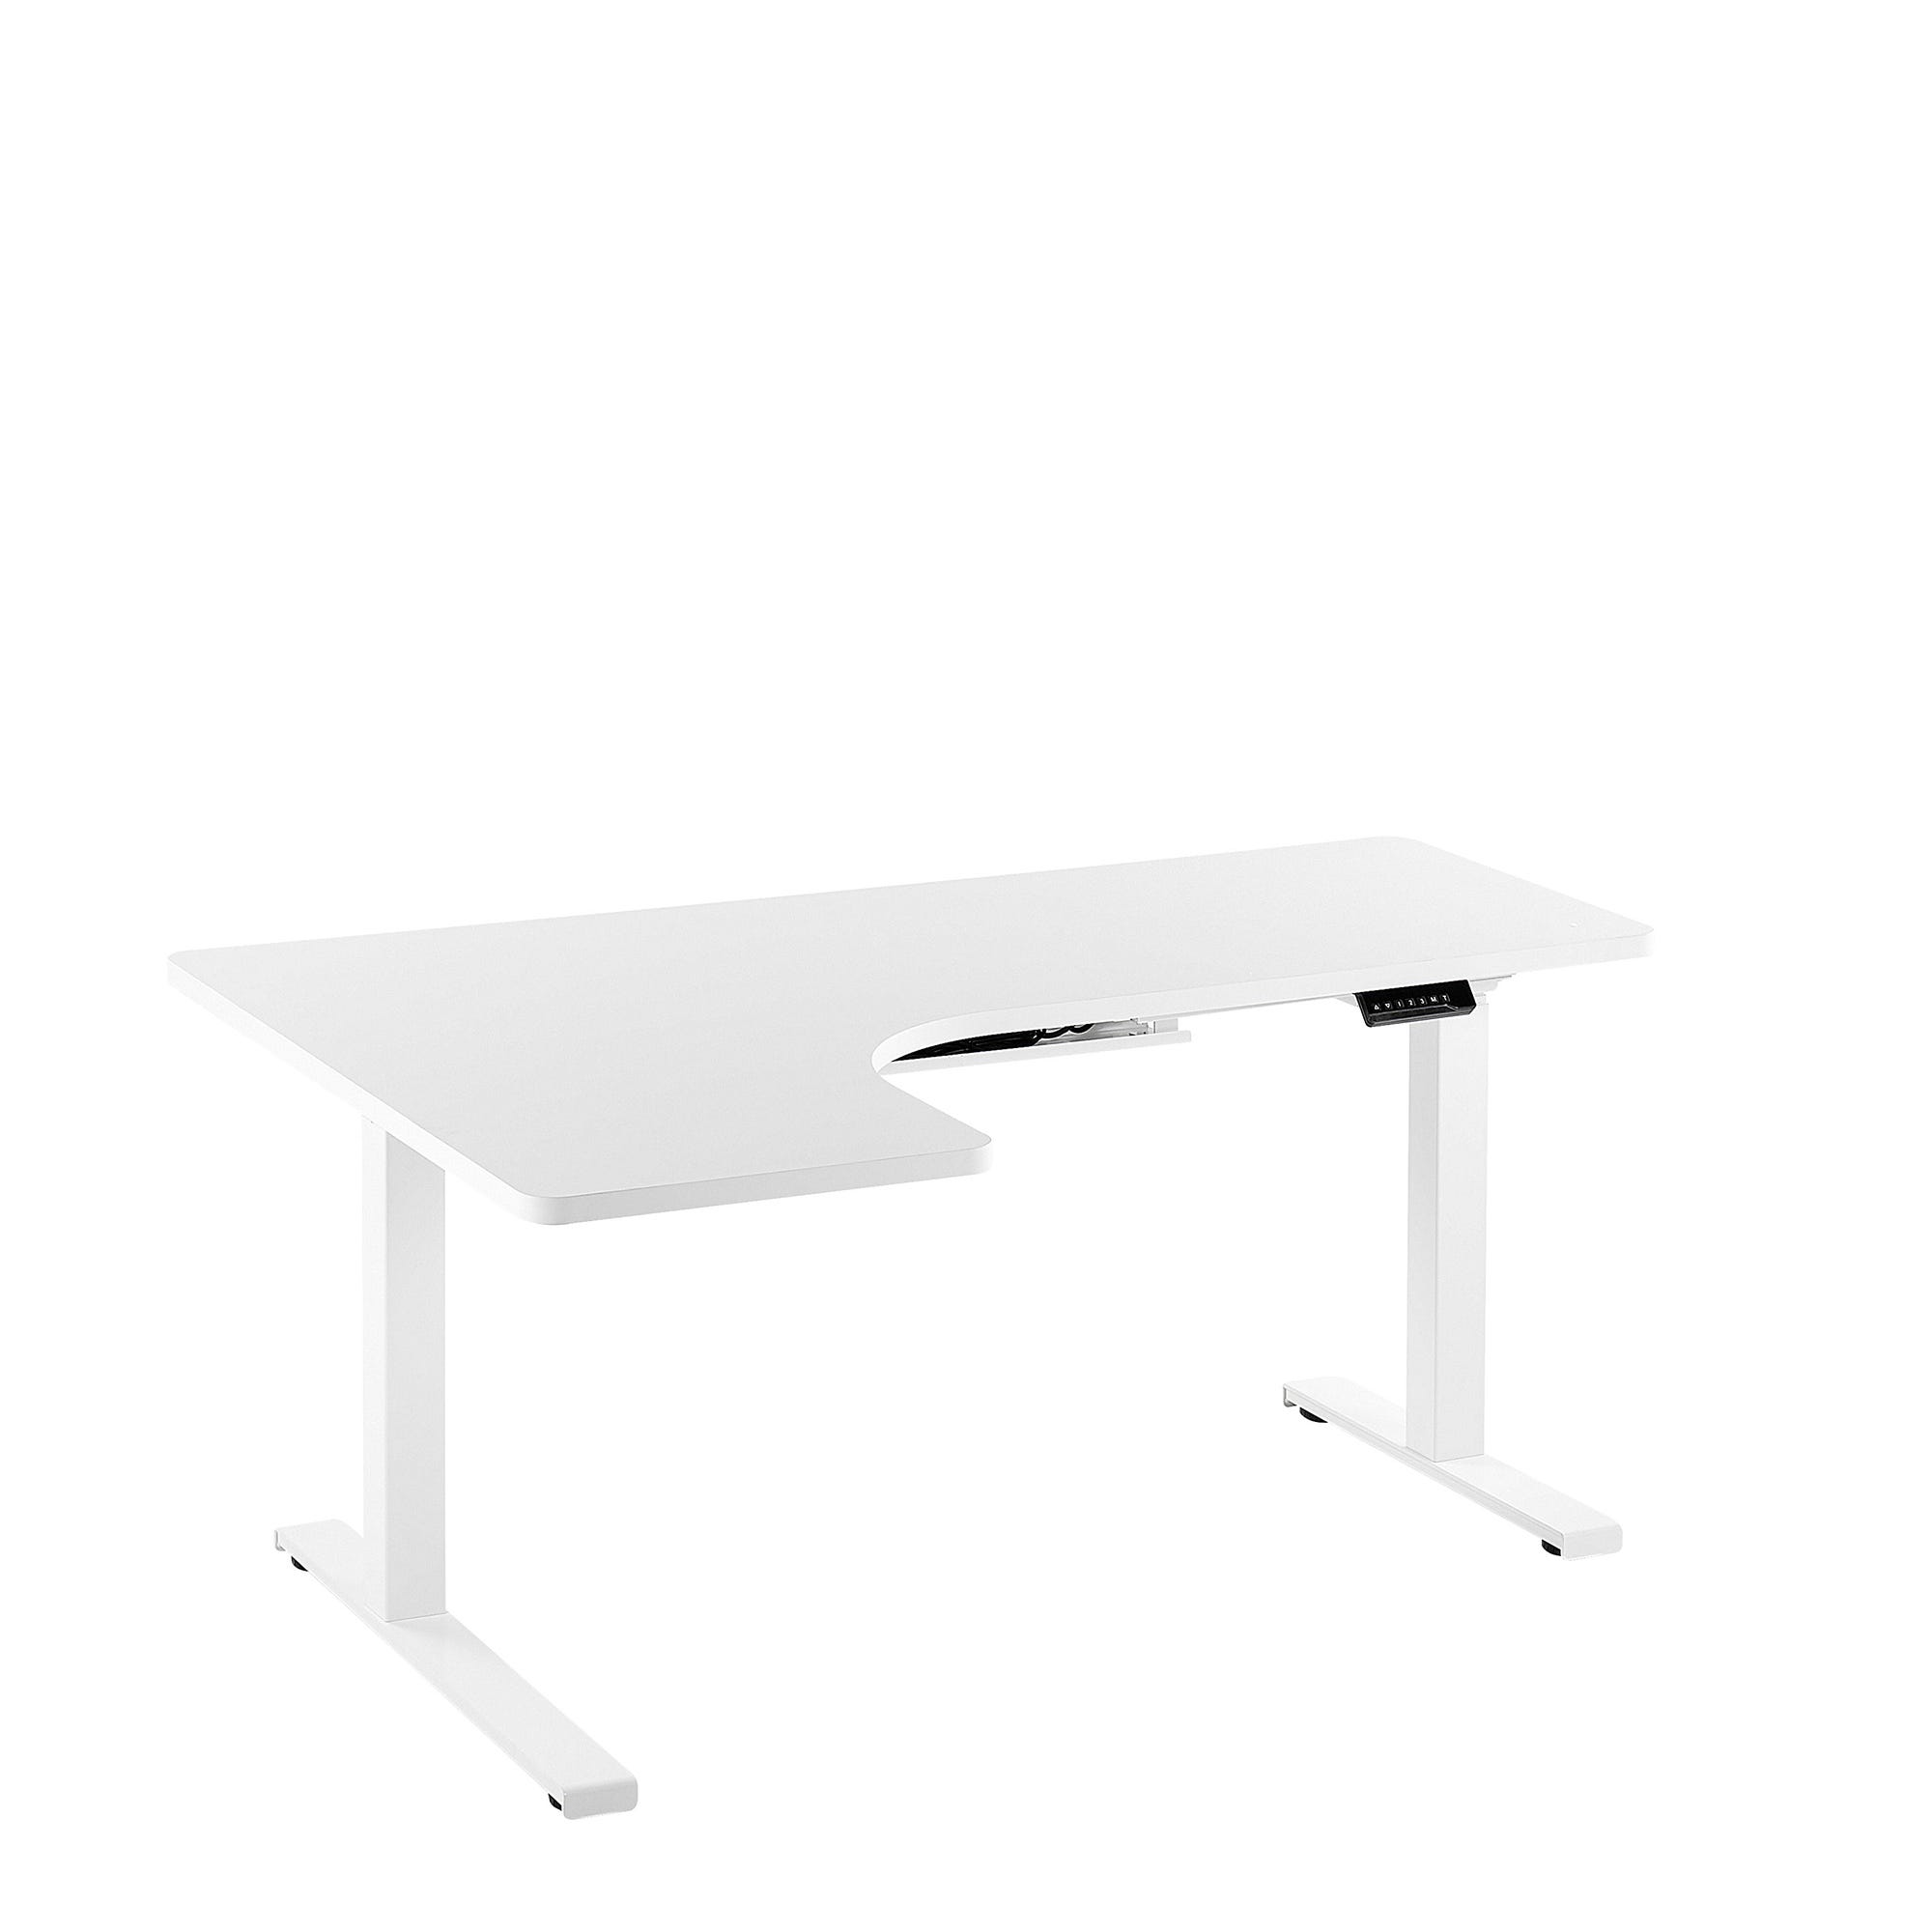 BEKANT Bureau d'angle droit, blanc, 160x110 cm - IKEA